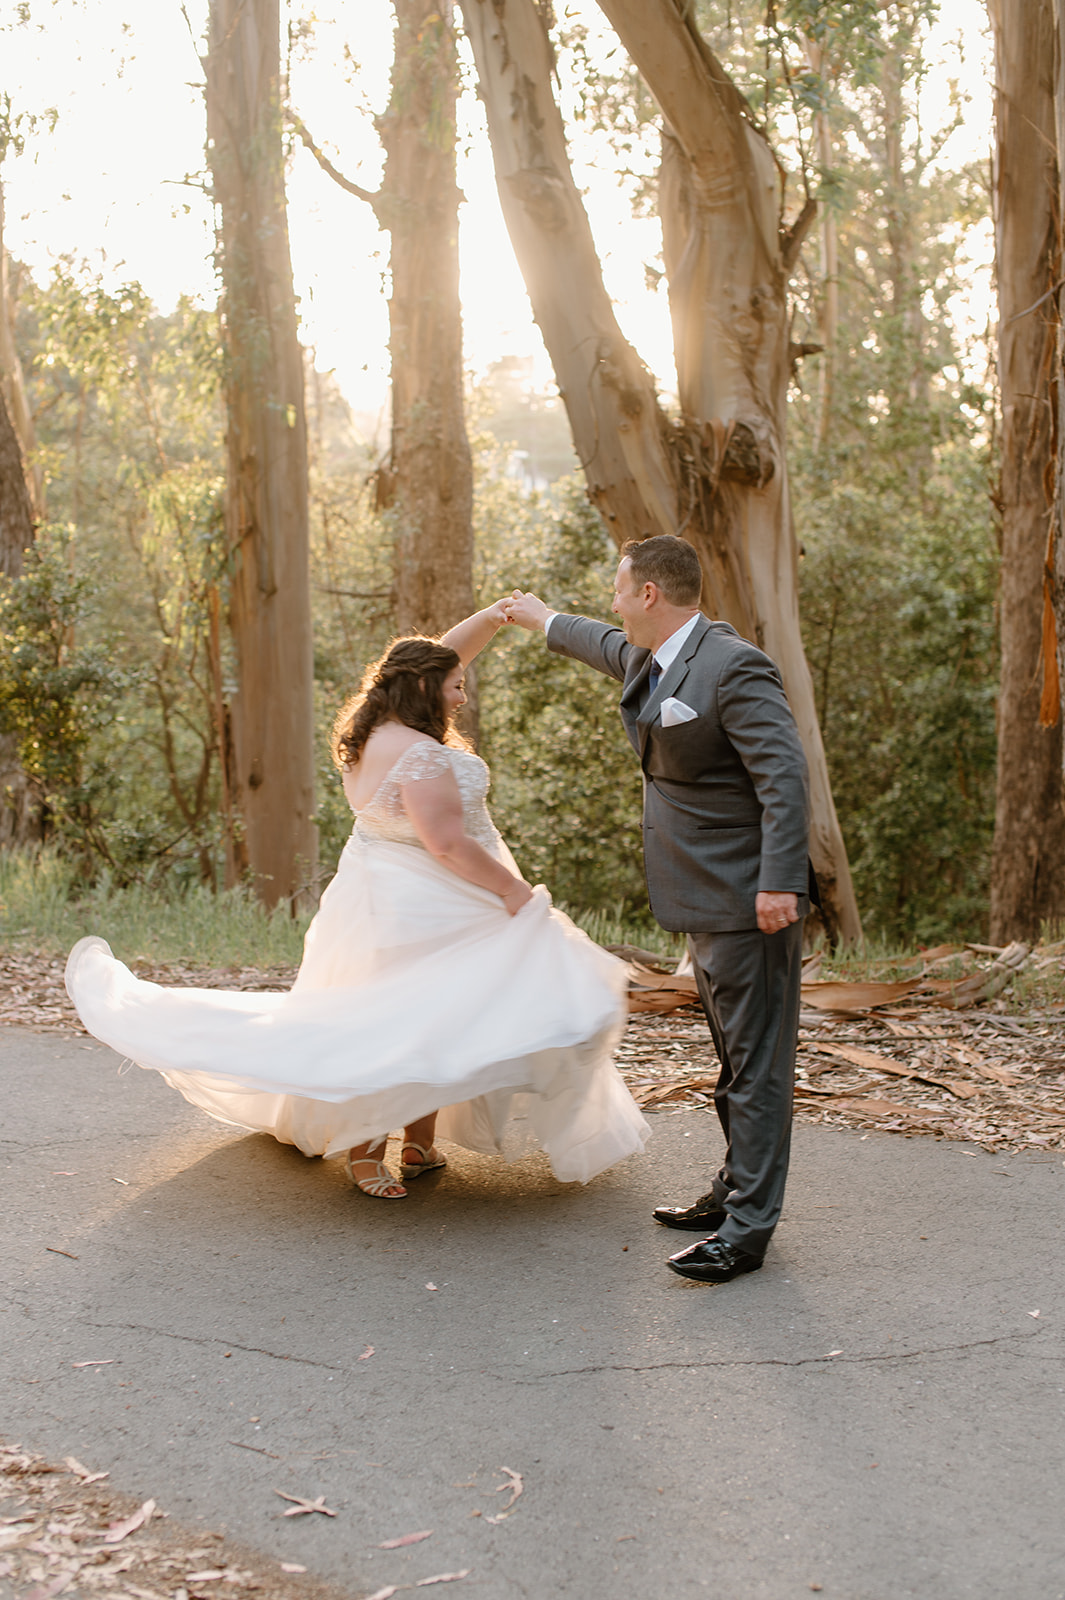 sydney jai photography - berkeley wedding, bride and groom photos, northern california wedding photographer